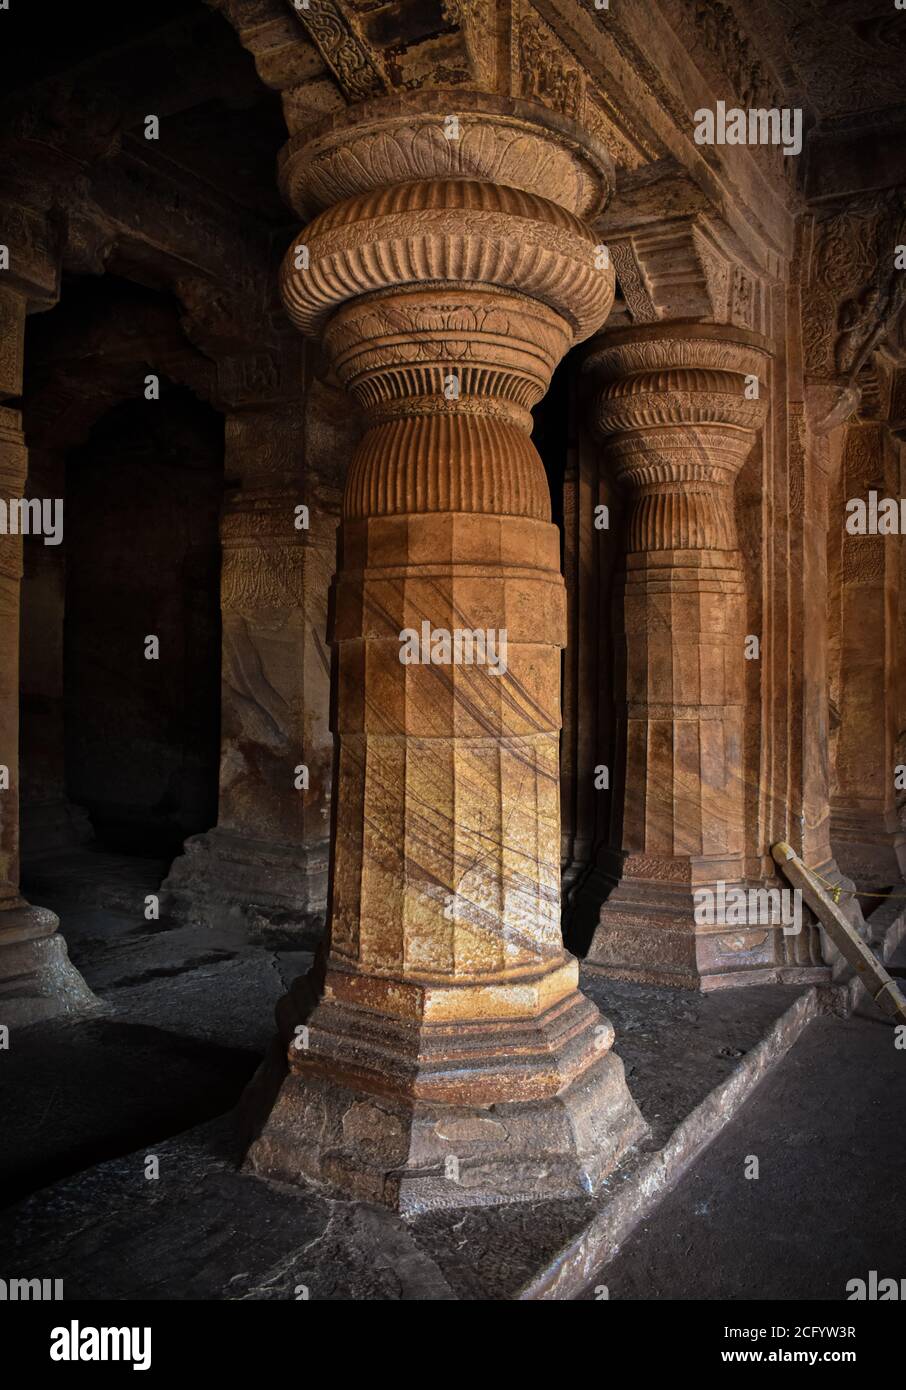 Stone pillars of Badami having ancient indian architecture. Stock Photo